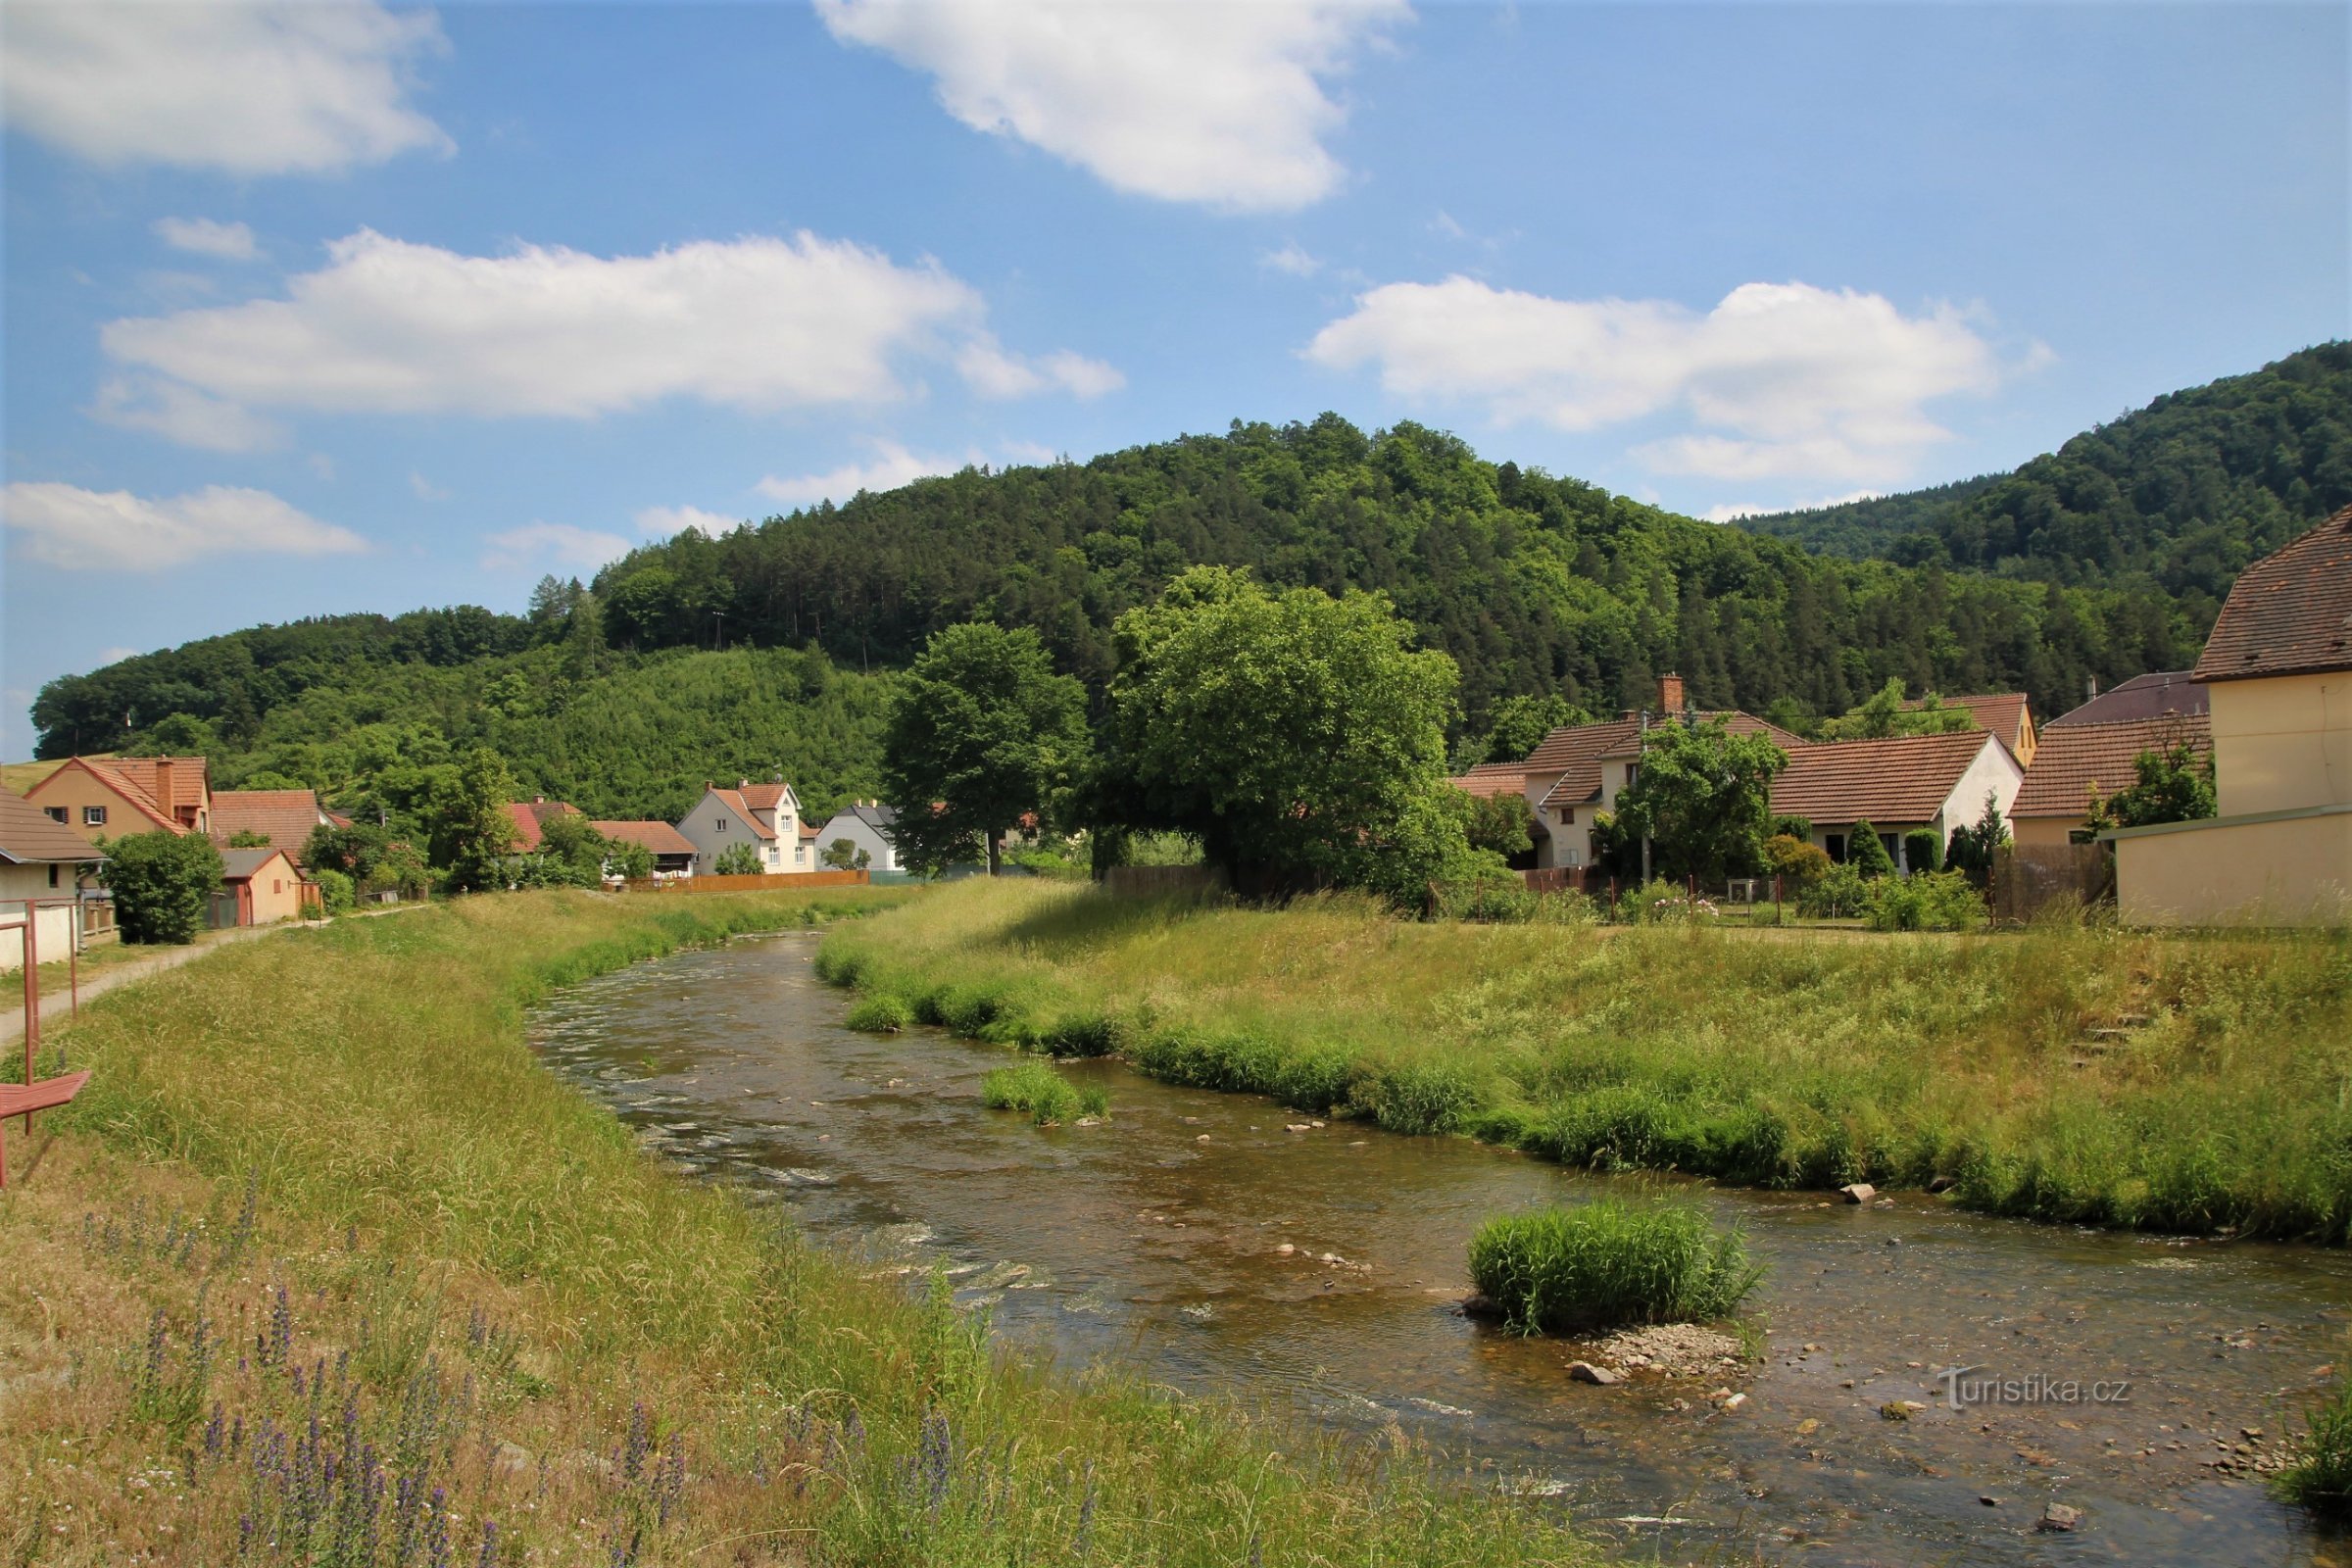 Râul Loučka